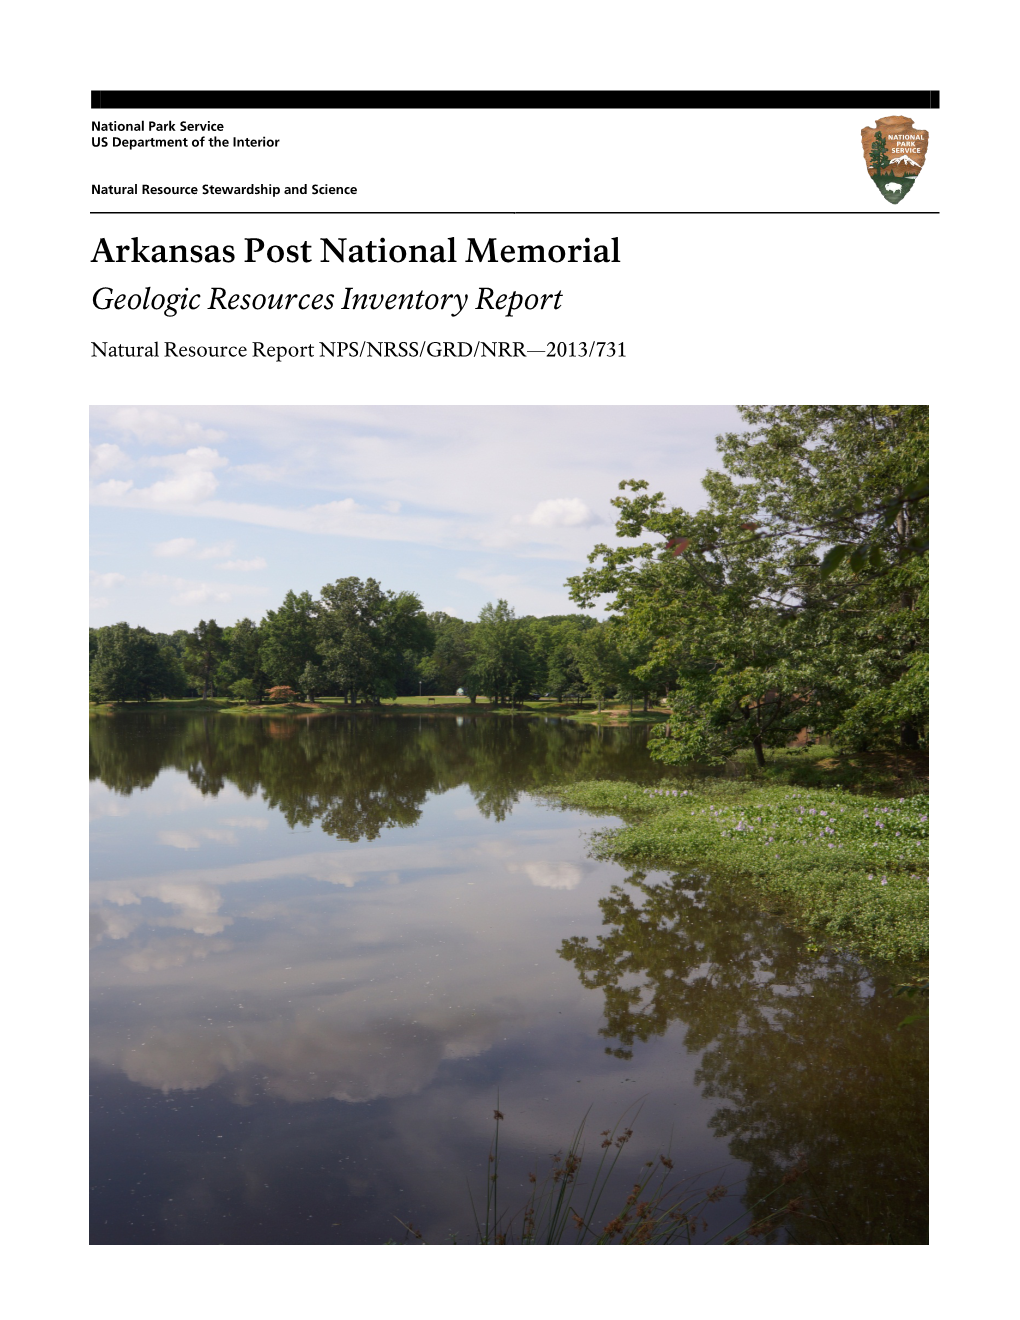 Arkansas Post National Memorial Geologic Resources Inventory Report